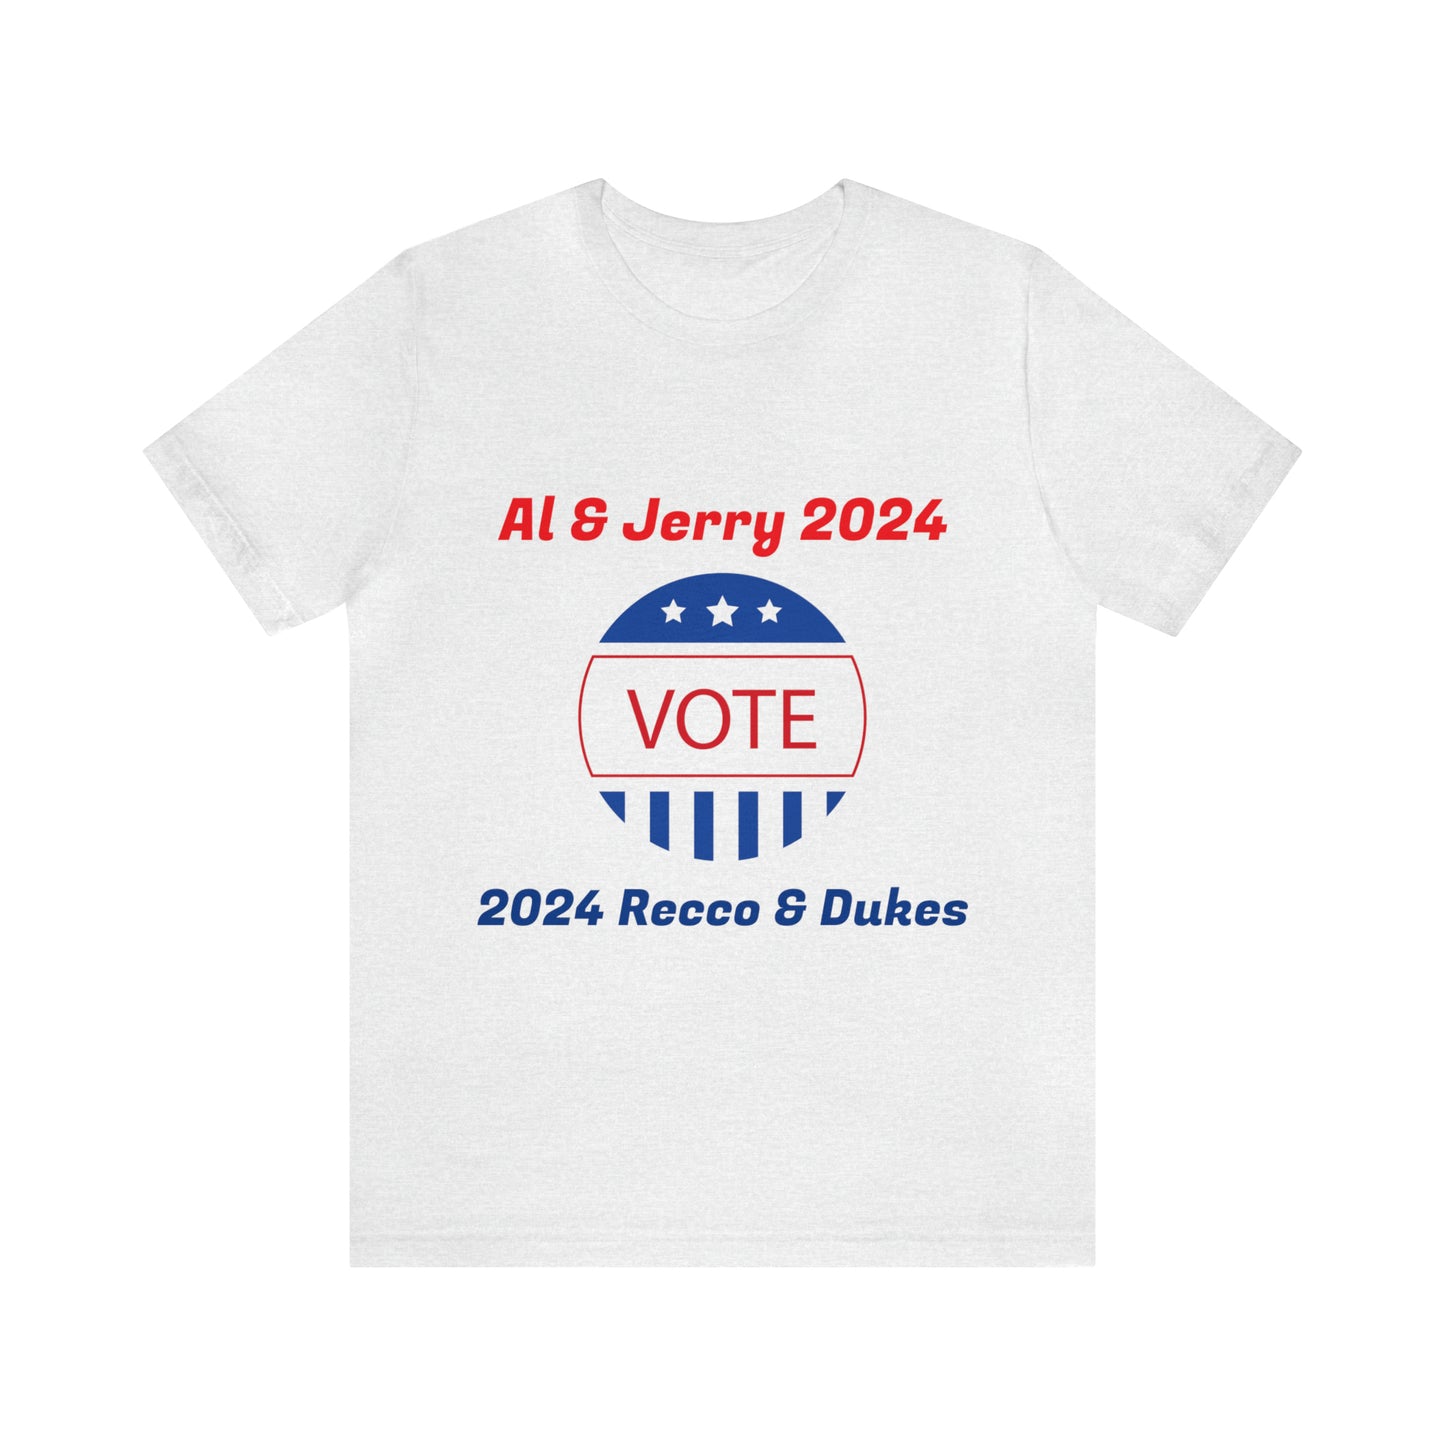 Al & Jerry "2024 Vote" Short Sleeve Tee